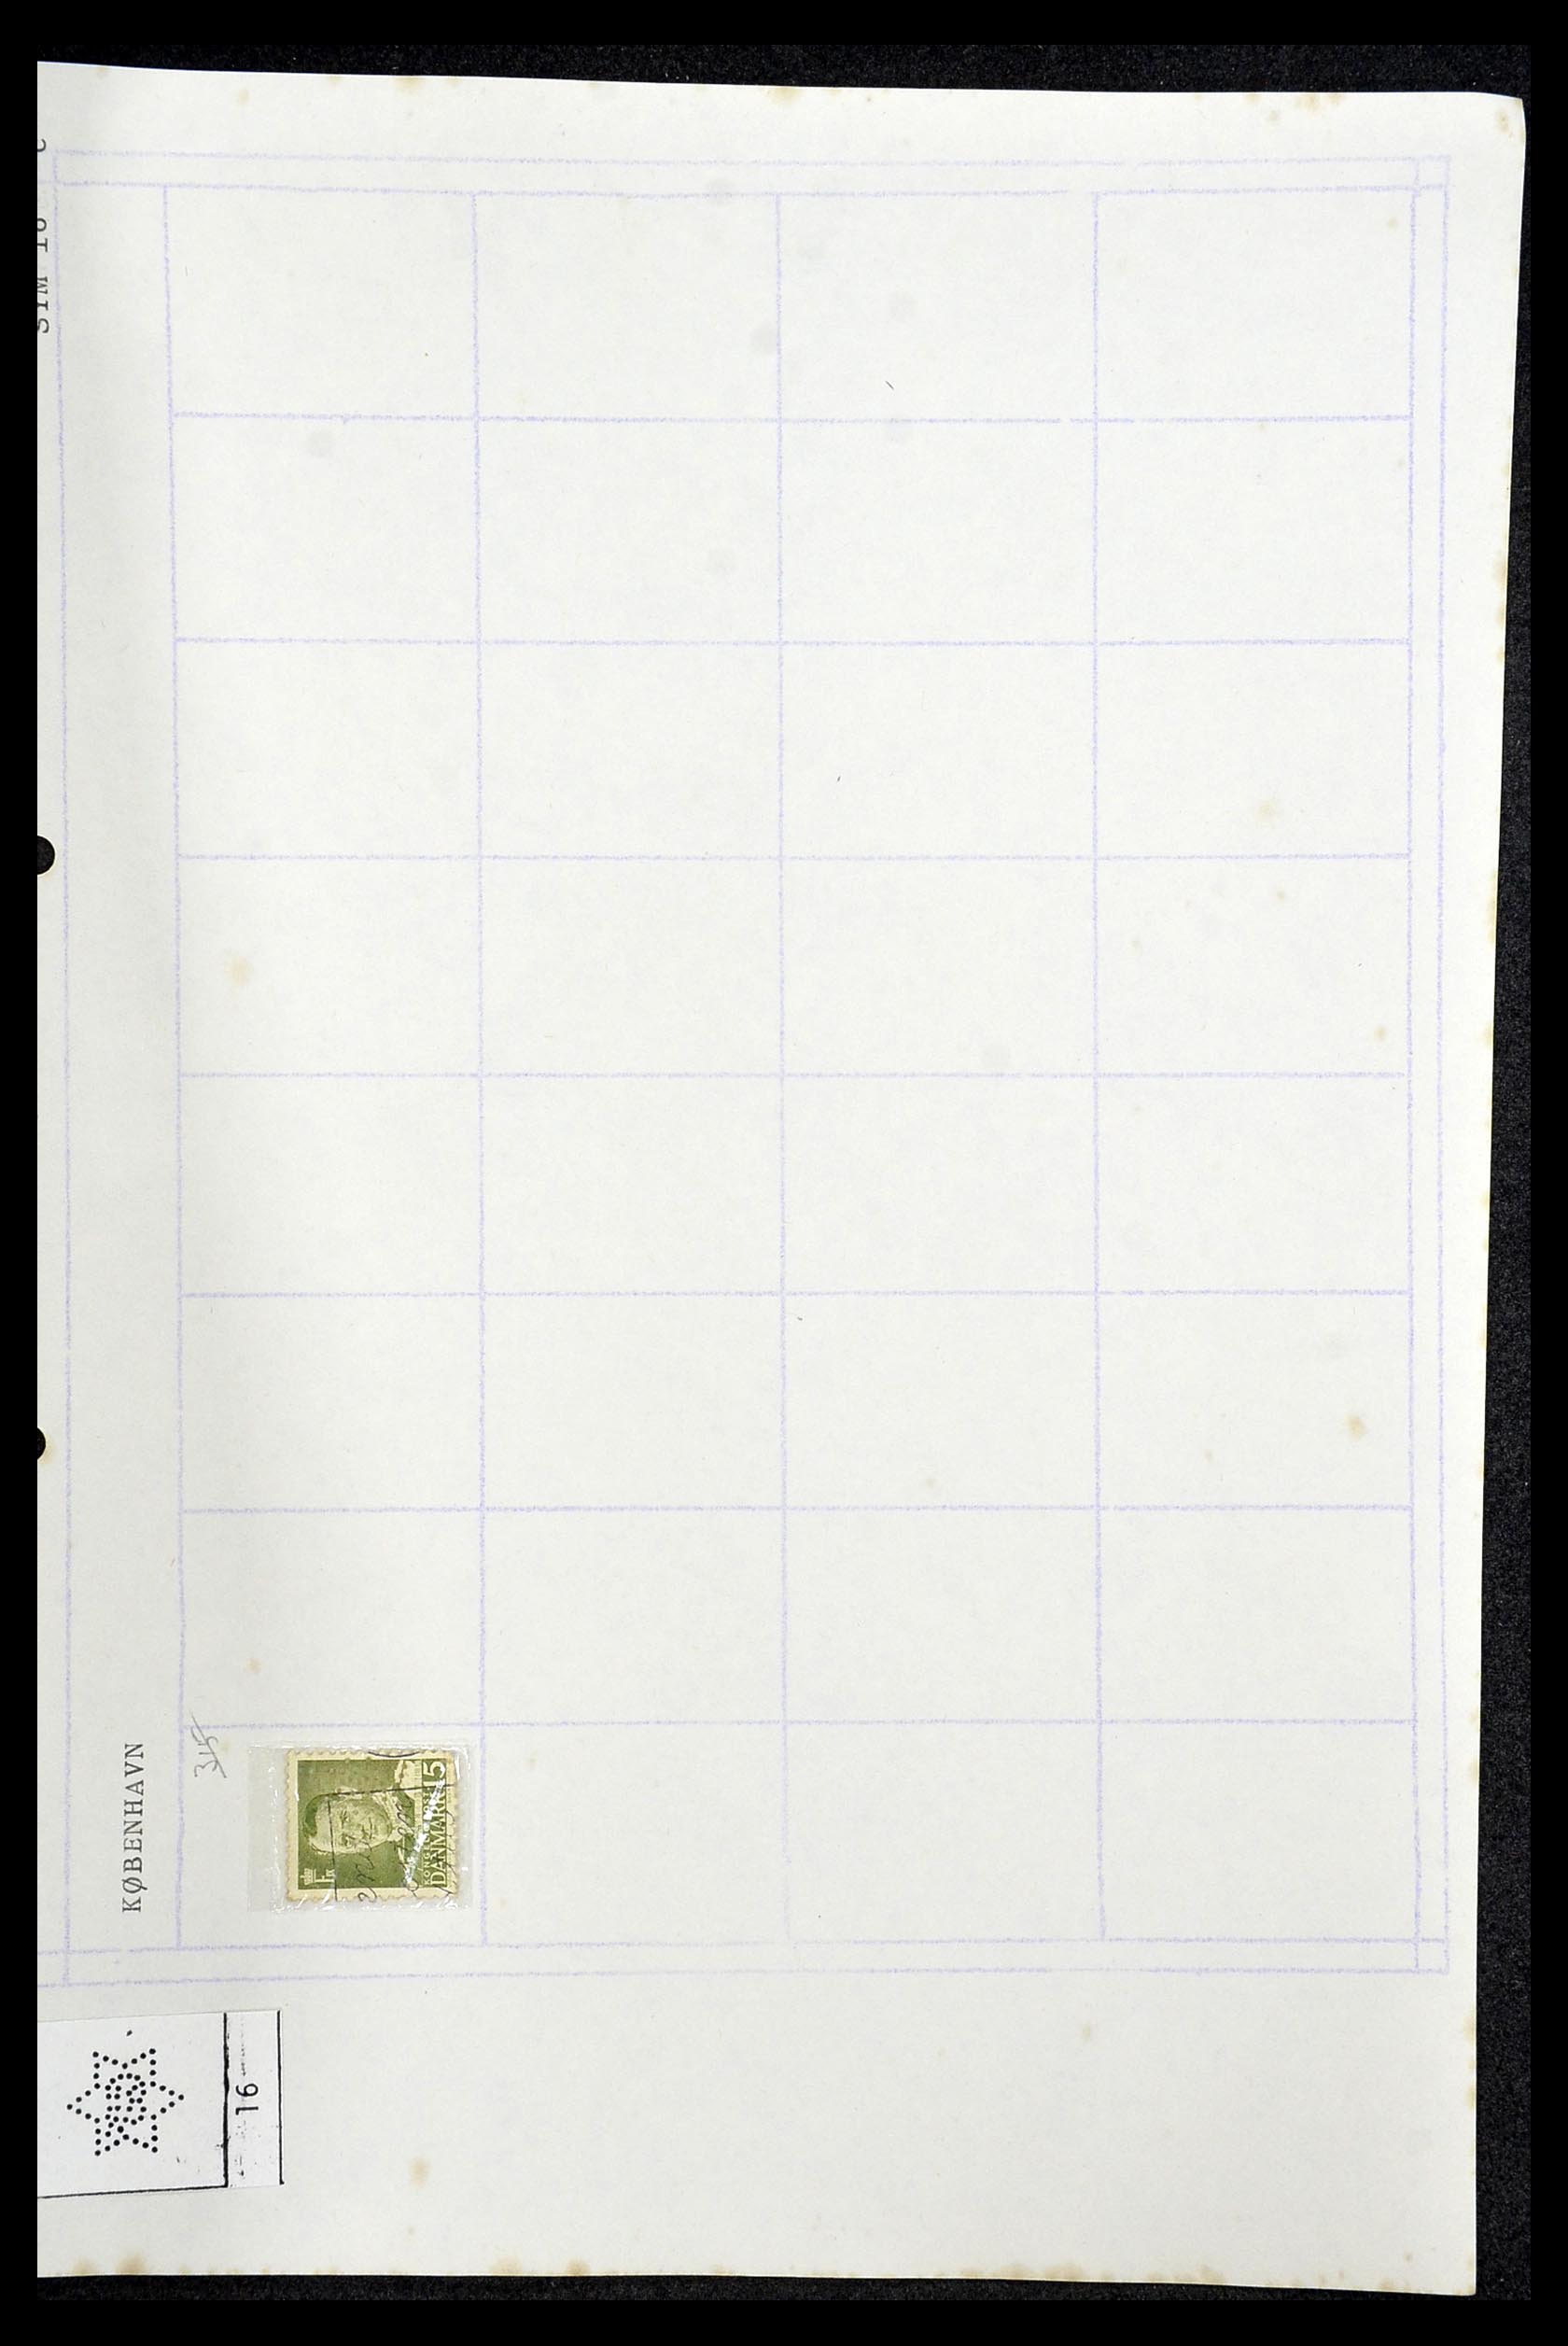 34415 283 - Stamp Collection 34415 Denmark perfins 1875-1980.